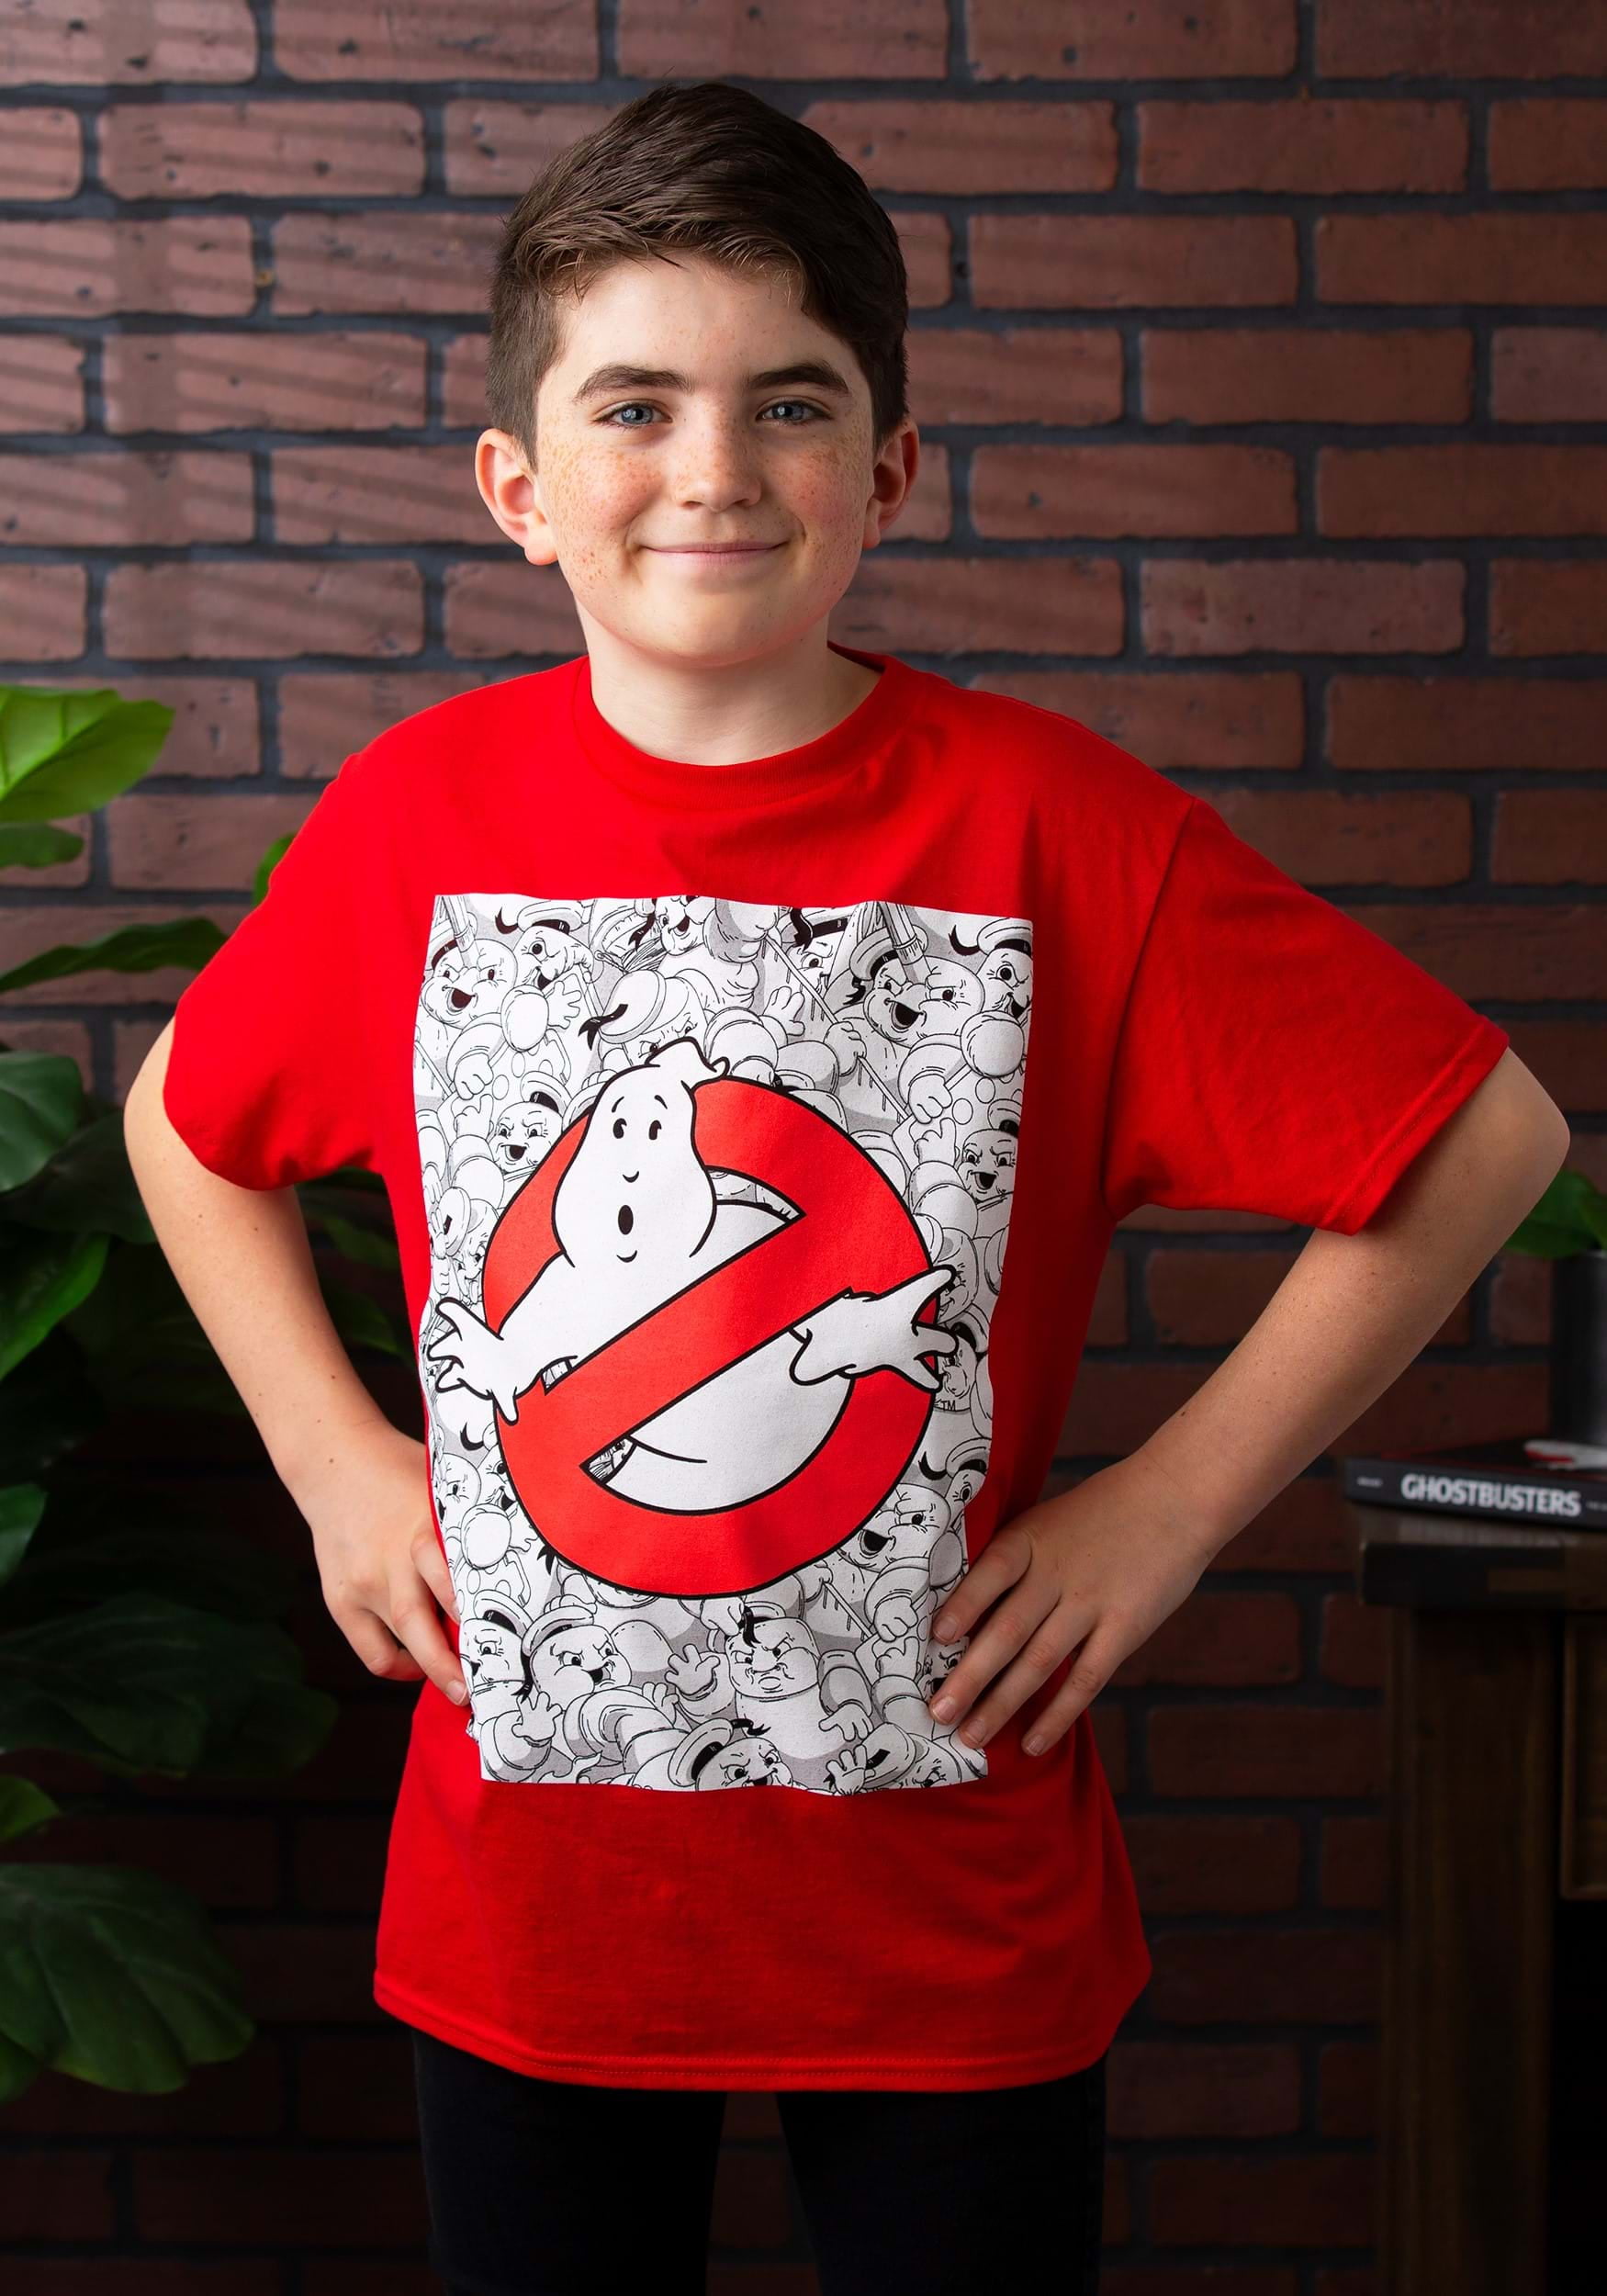 Ghostbuster Kid's T-Shirt Children Boys Girls Unisex Top 